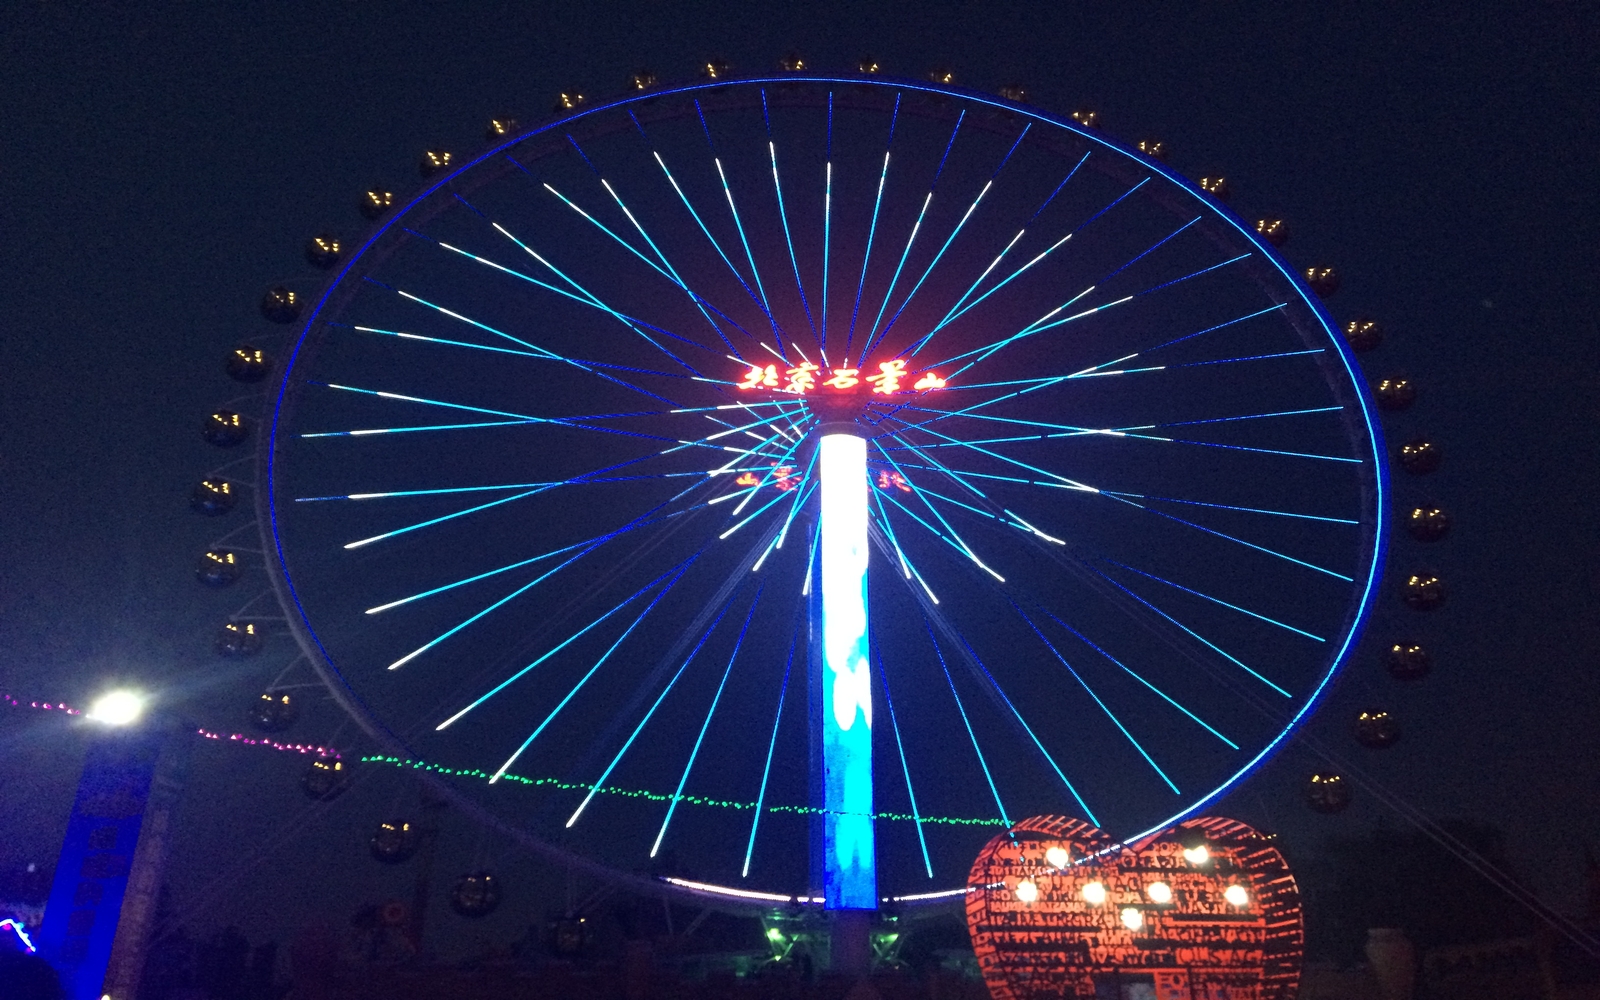 The Beijing Shijingshan Amusement Park Ferris wheel